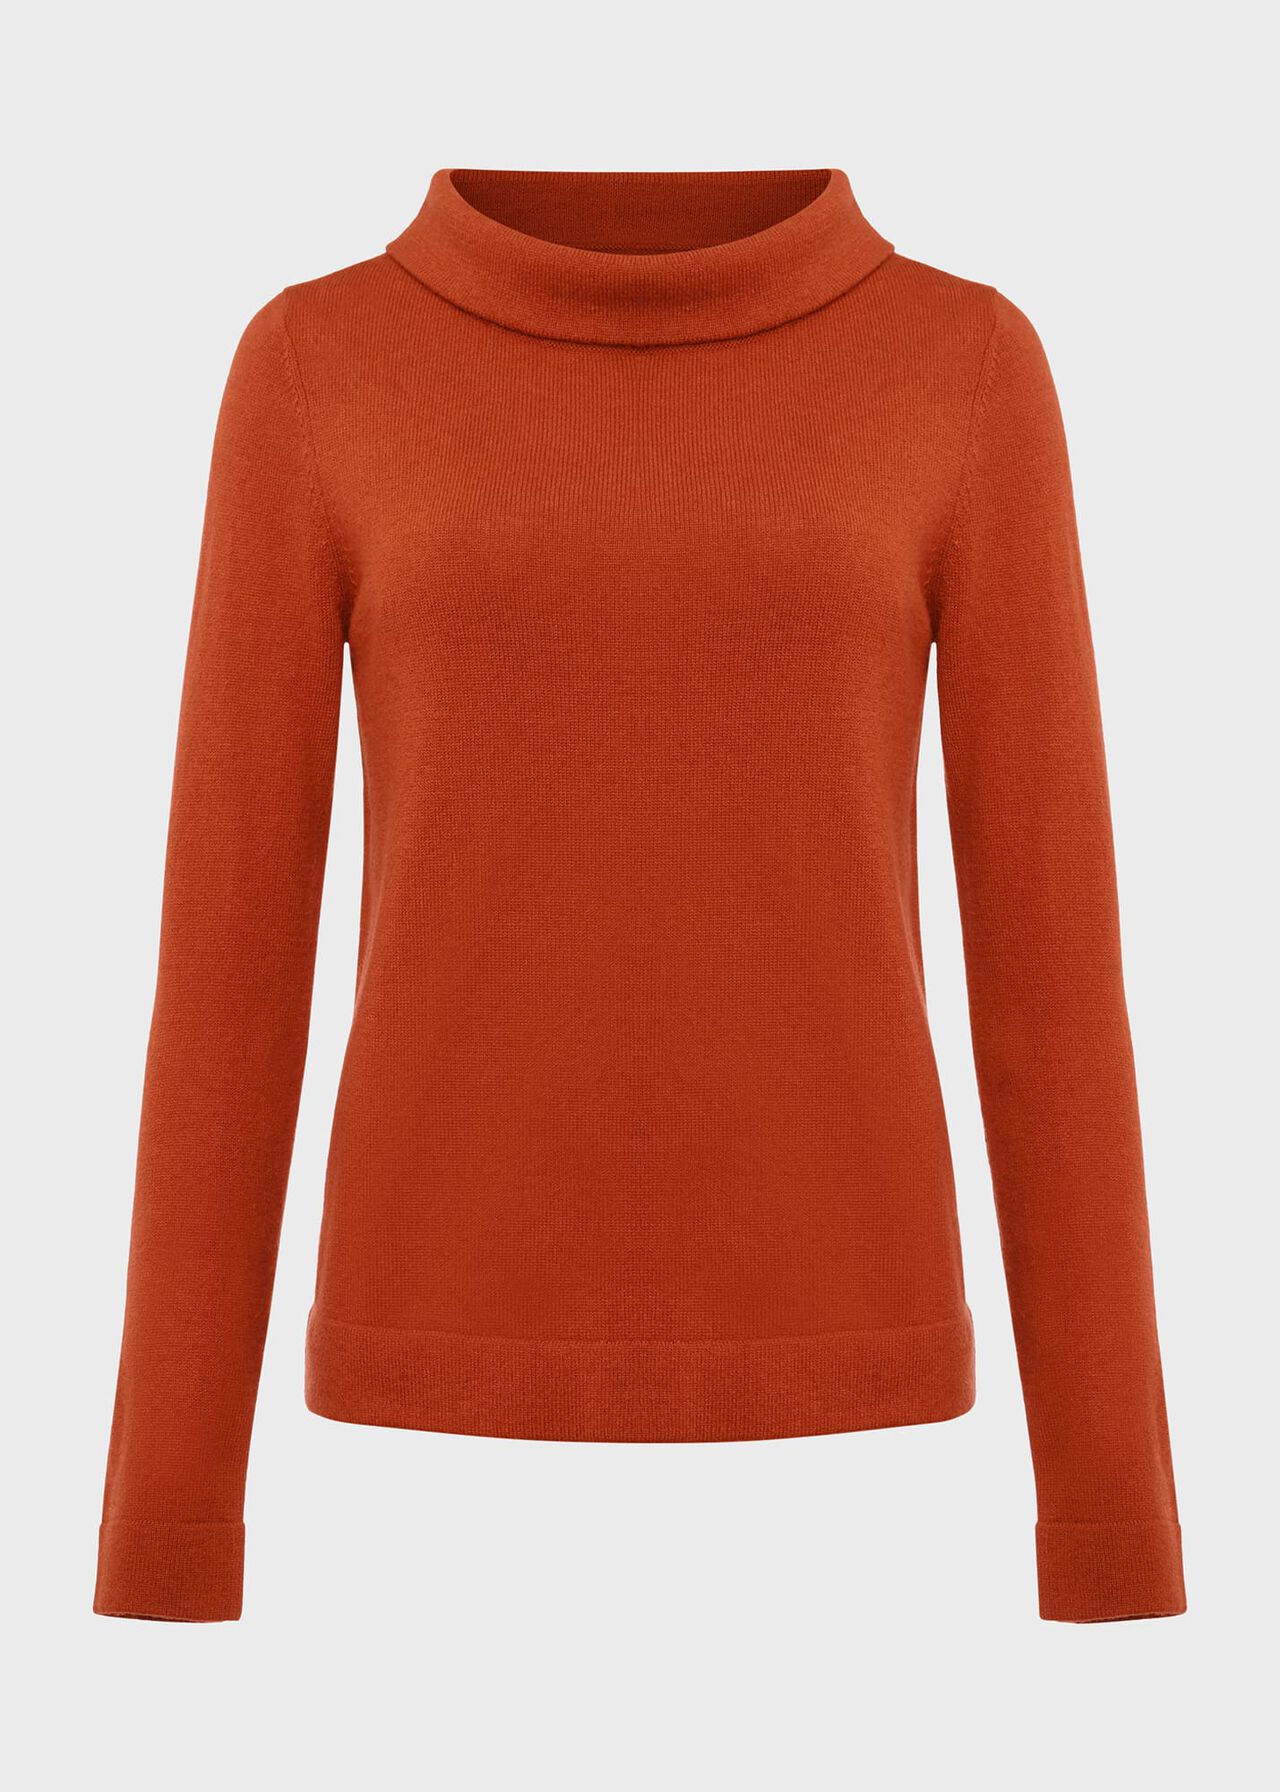 Audrey Wool Cashmere Sweater, Burnt Orange, hi-res